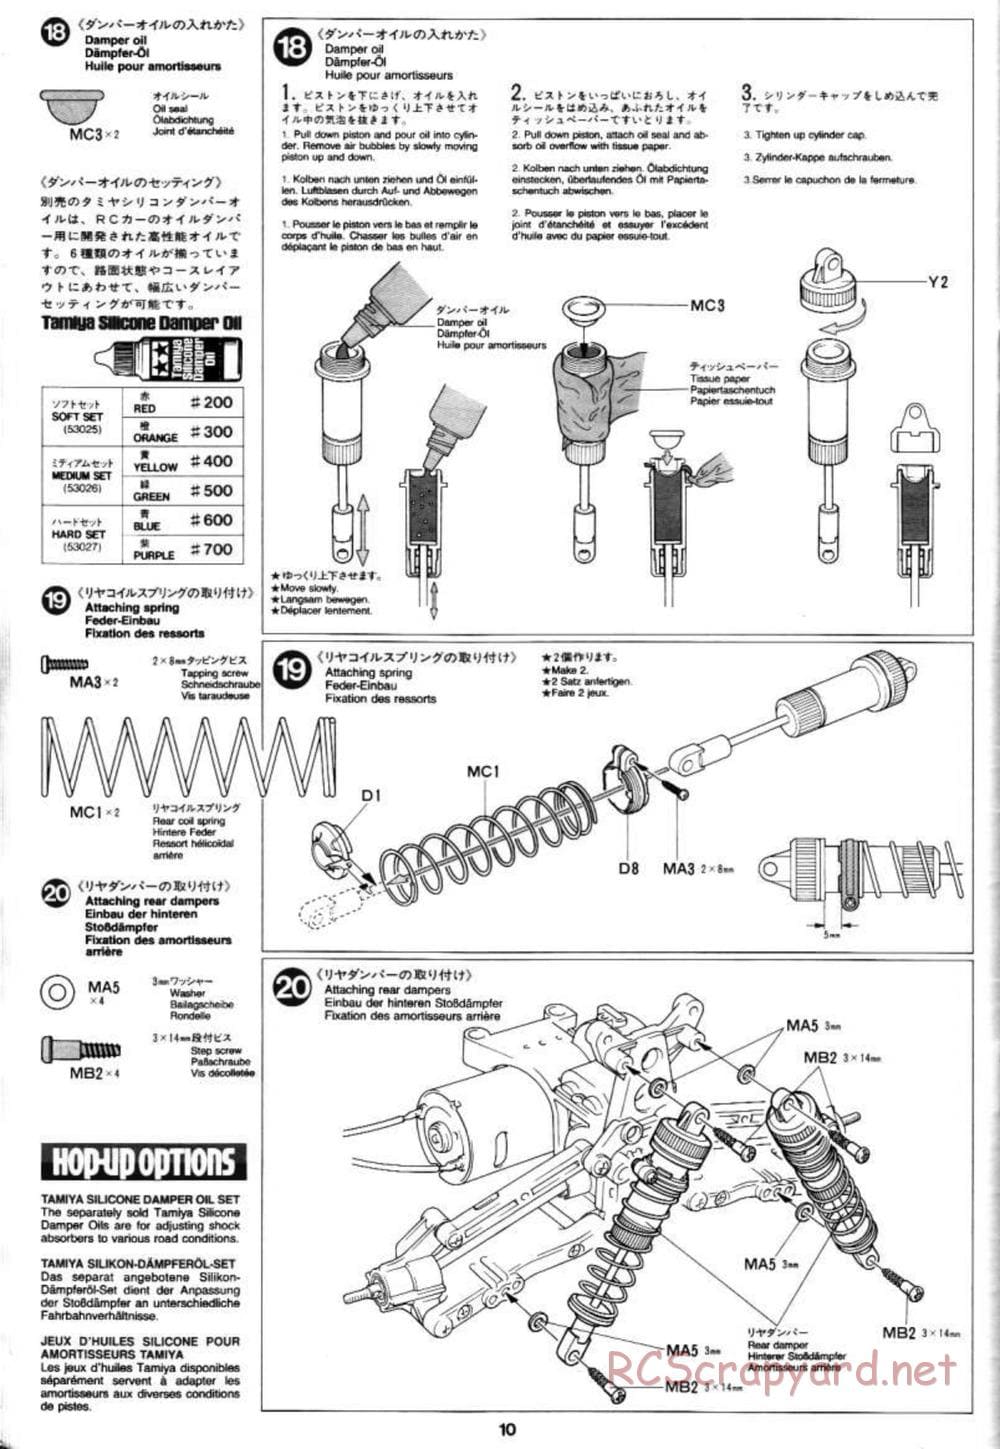 Tamiya - Blazing Star Chassis - Manual - Page 10